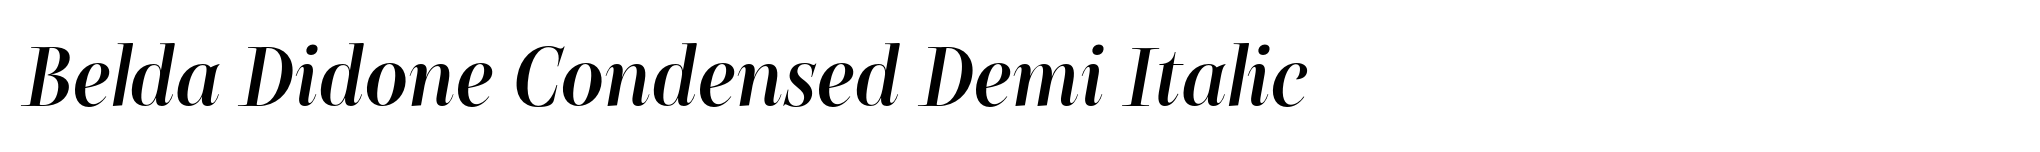 Belda Didone Condensed Demi Italic image